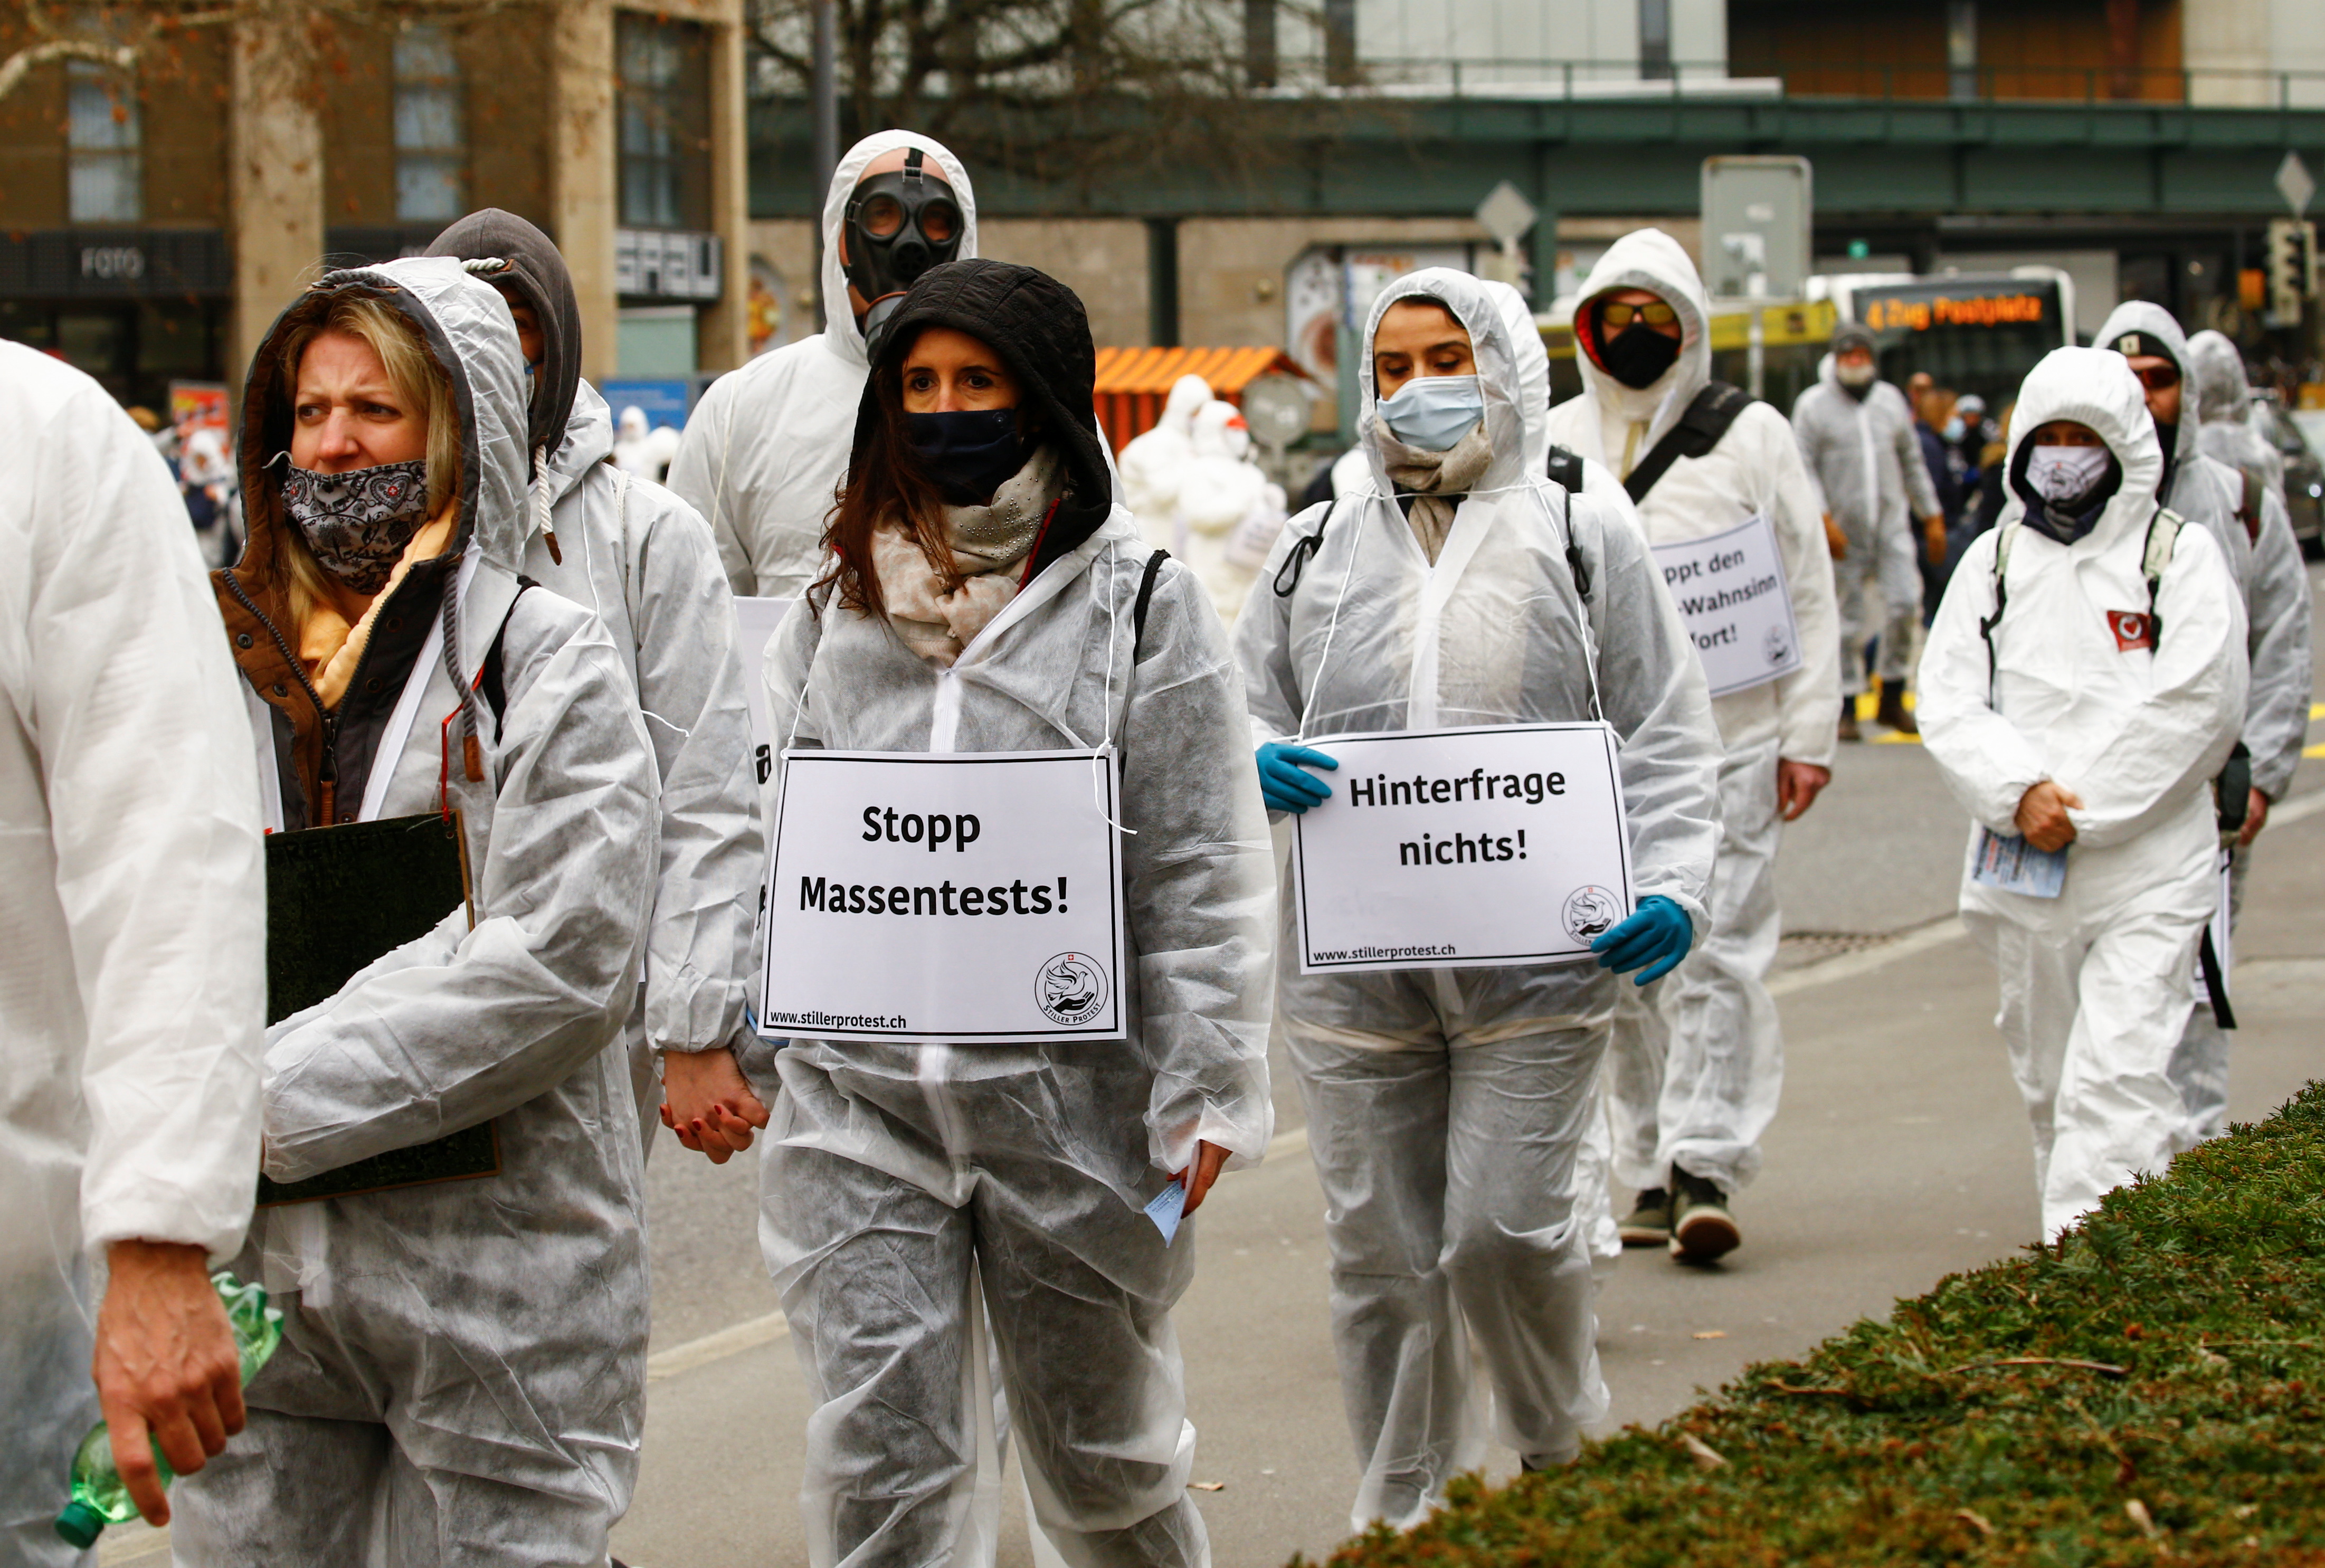 Demonstrators march amid the coronavirus disease (COVID-19) pandemic in Zug, Switzerland, February 6, 2021. REUTERS/Arnd Wiegmann